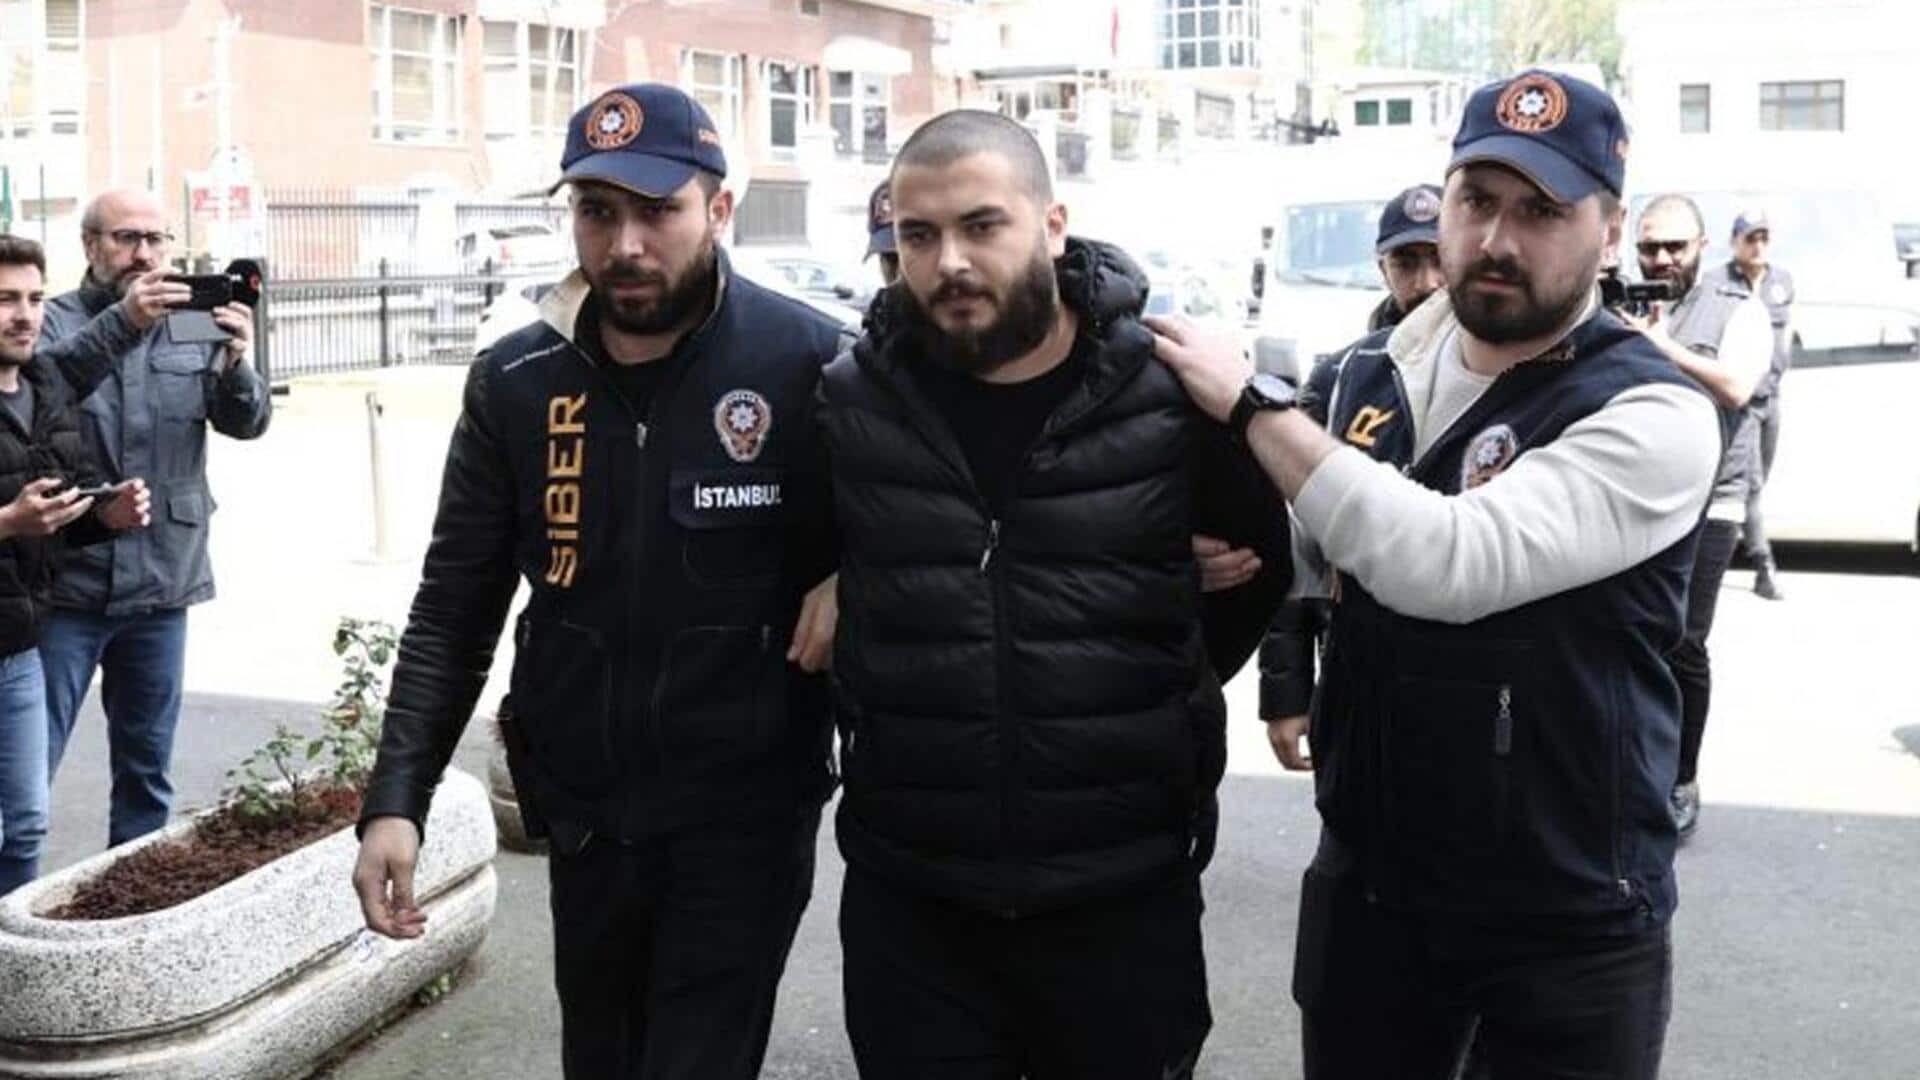 तुर्की: क्रिप्टो एक्सचेंज थोडेक्स के संस्थापक फारुक फातिह ओजेर को हुई 11,196 साल की सजा